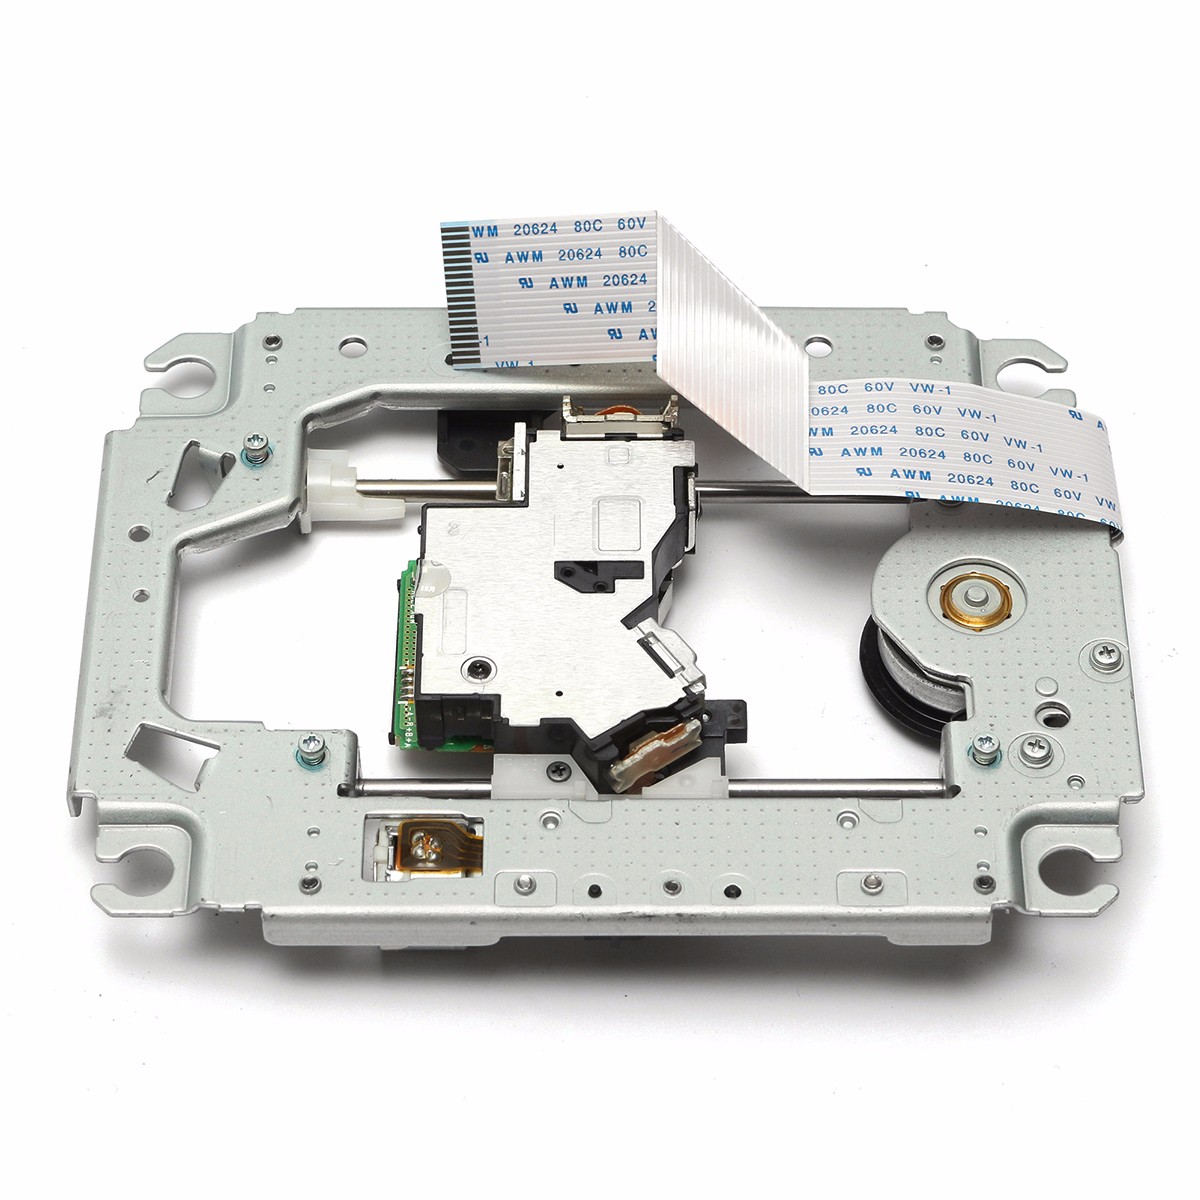 KES-410ACA/410A KEM-410ACA Laser Lens & Deck for Play Station 3 for PS3 Parts 44